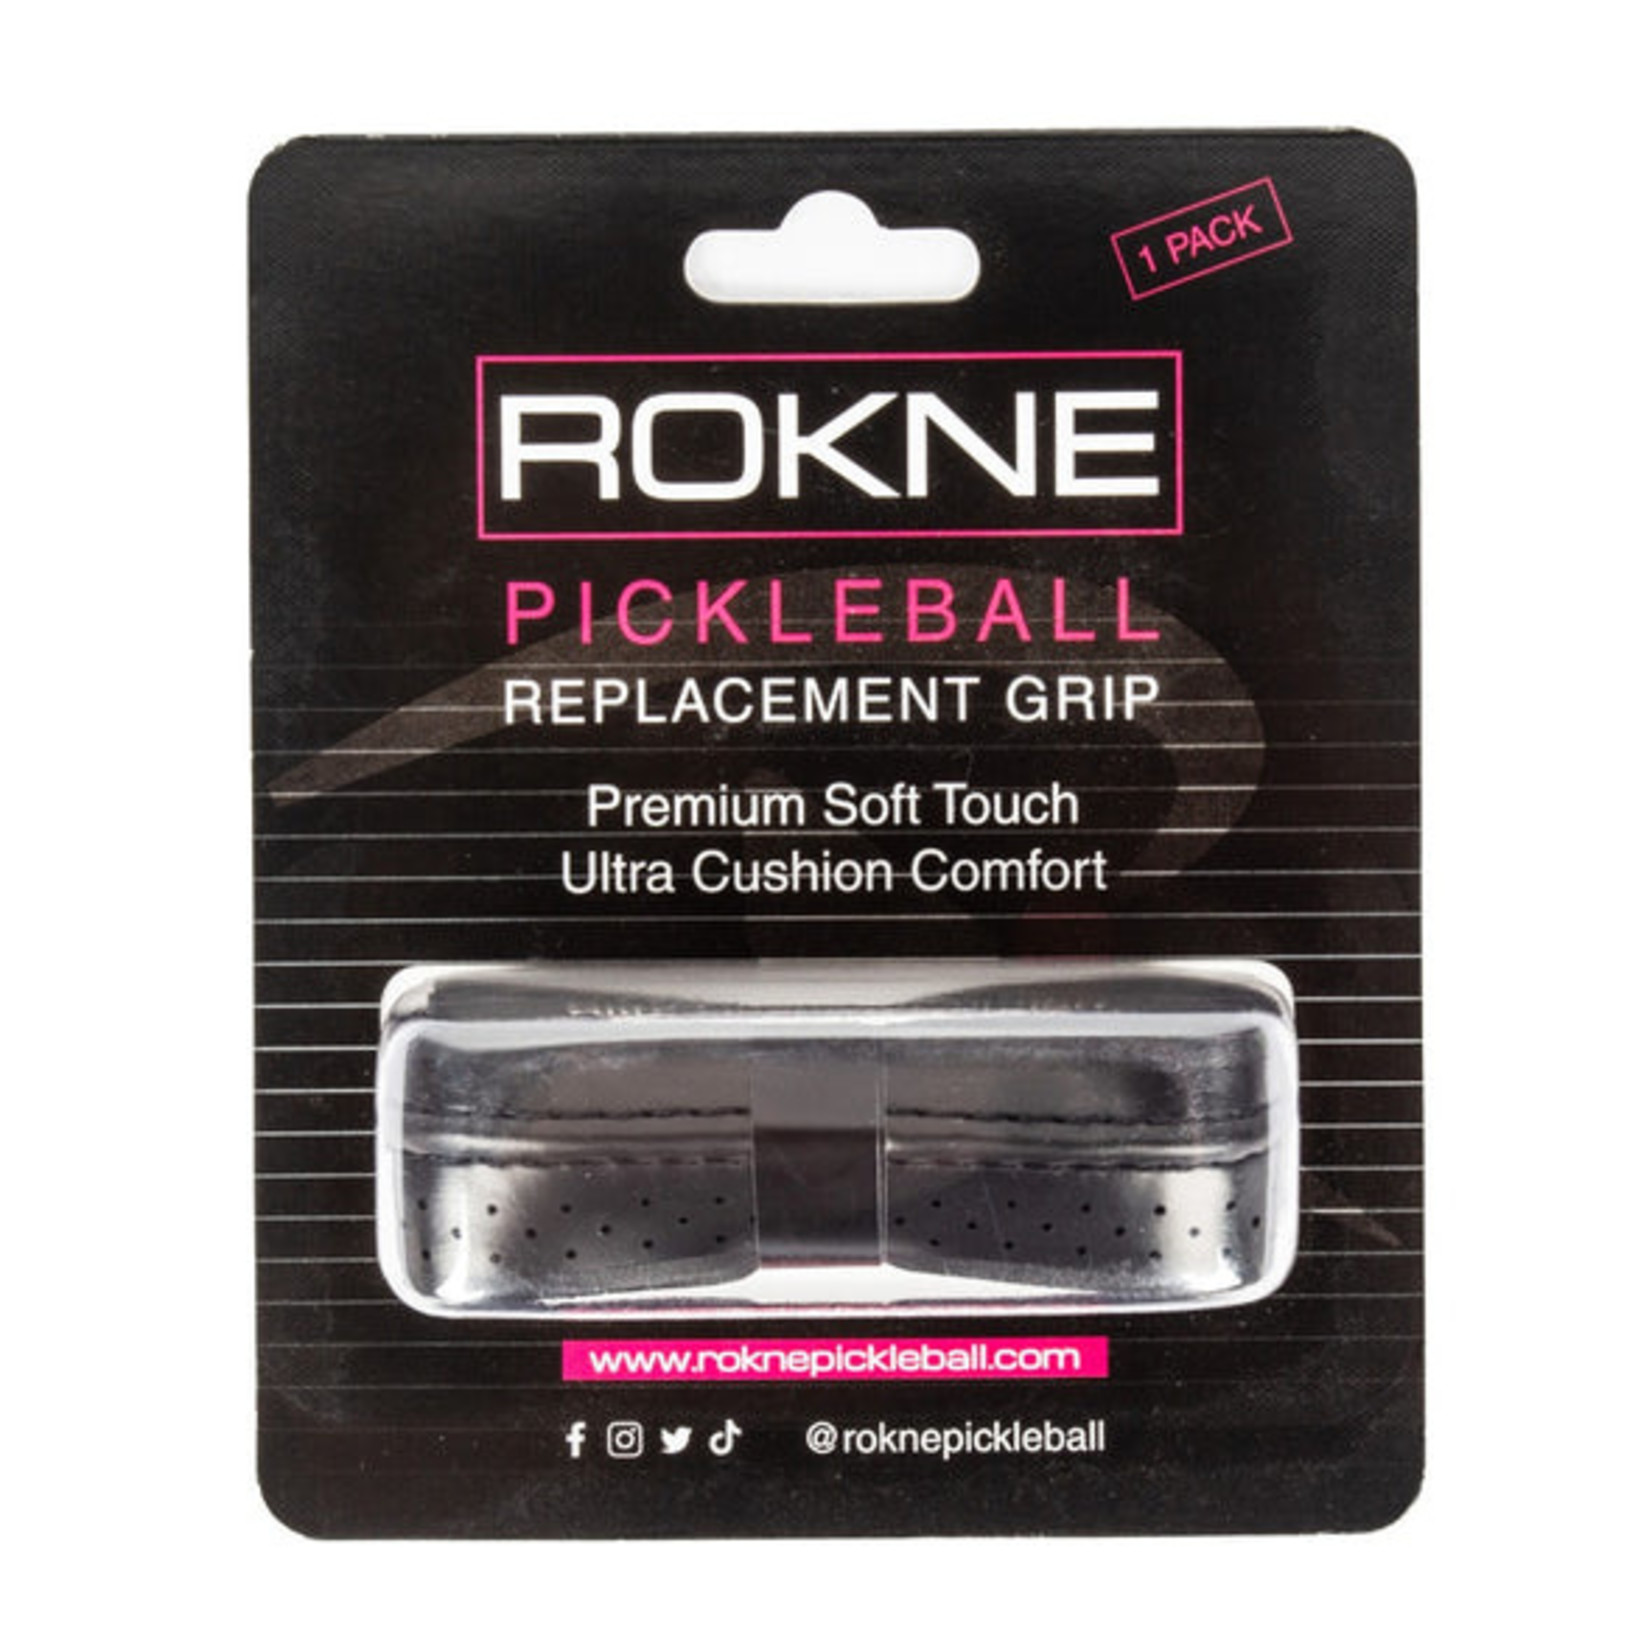 ROKNE pickleball replacement grip